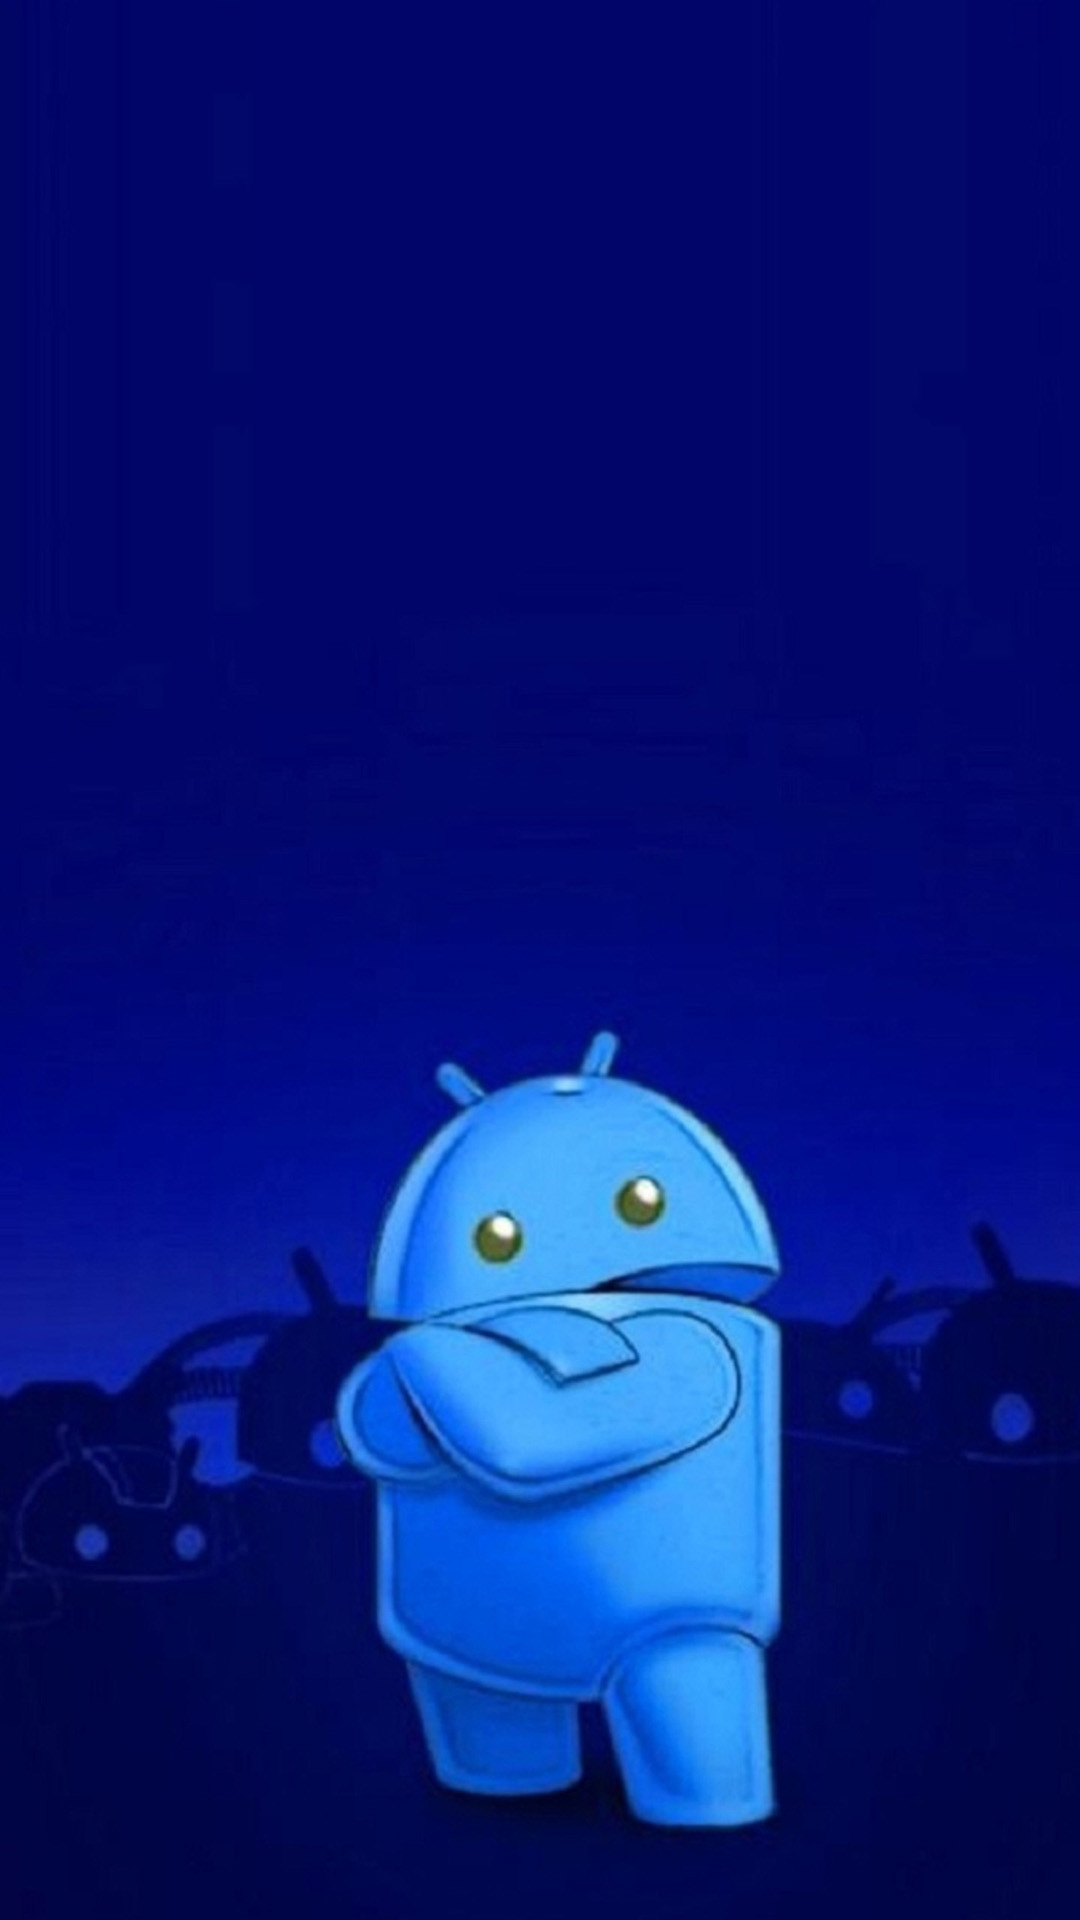 fond d'écran android bleu,bleu,dessin animé,ciel,bleu cobalt,bleu électrique